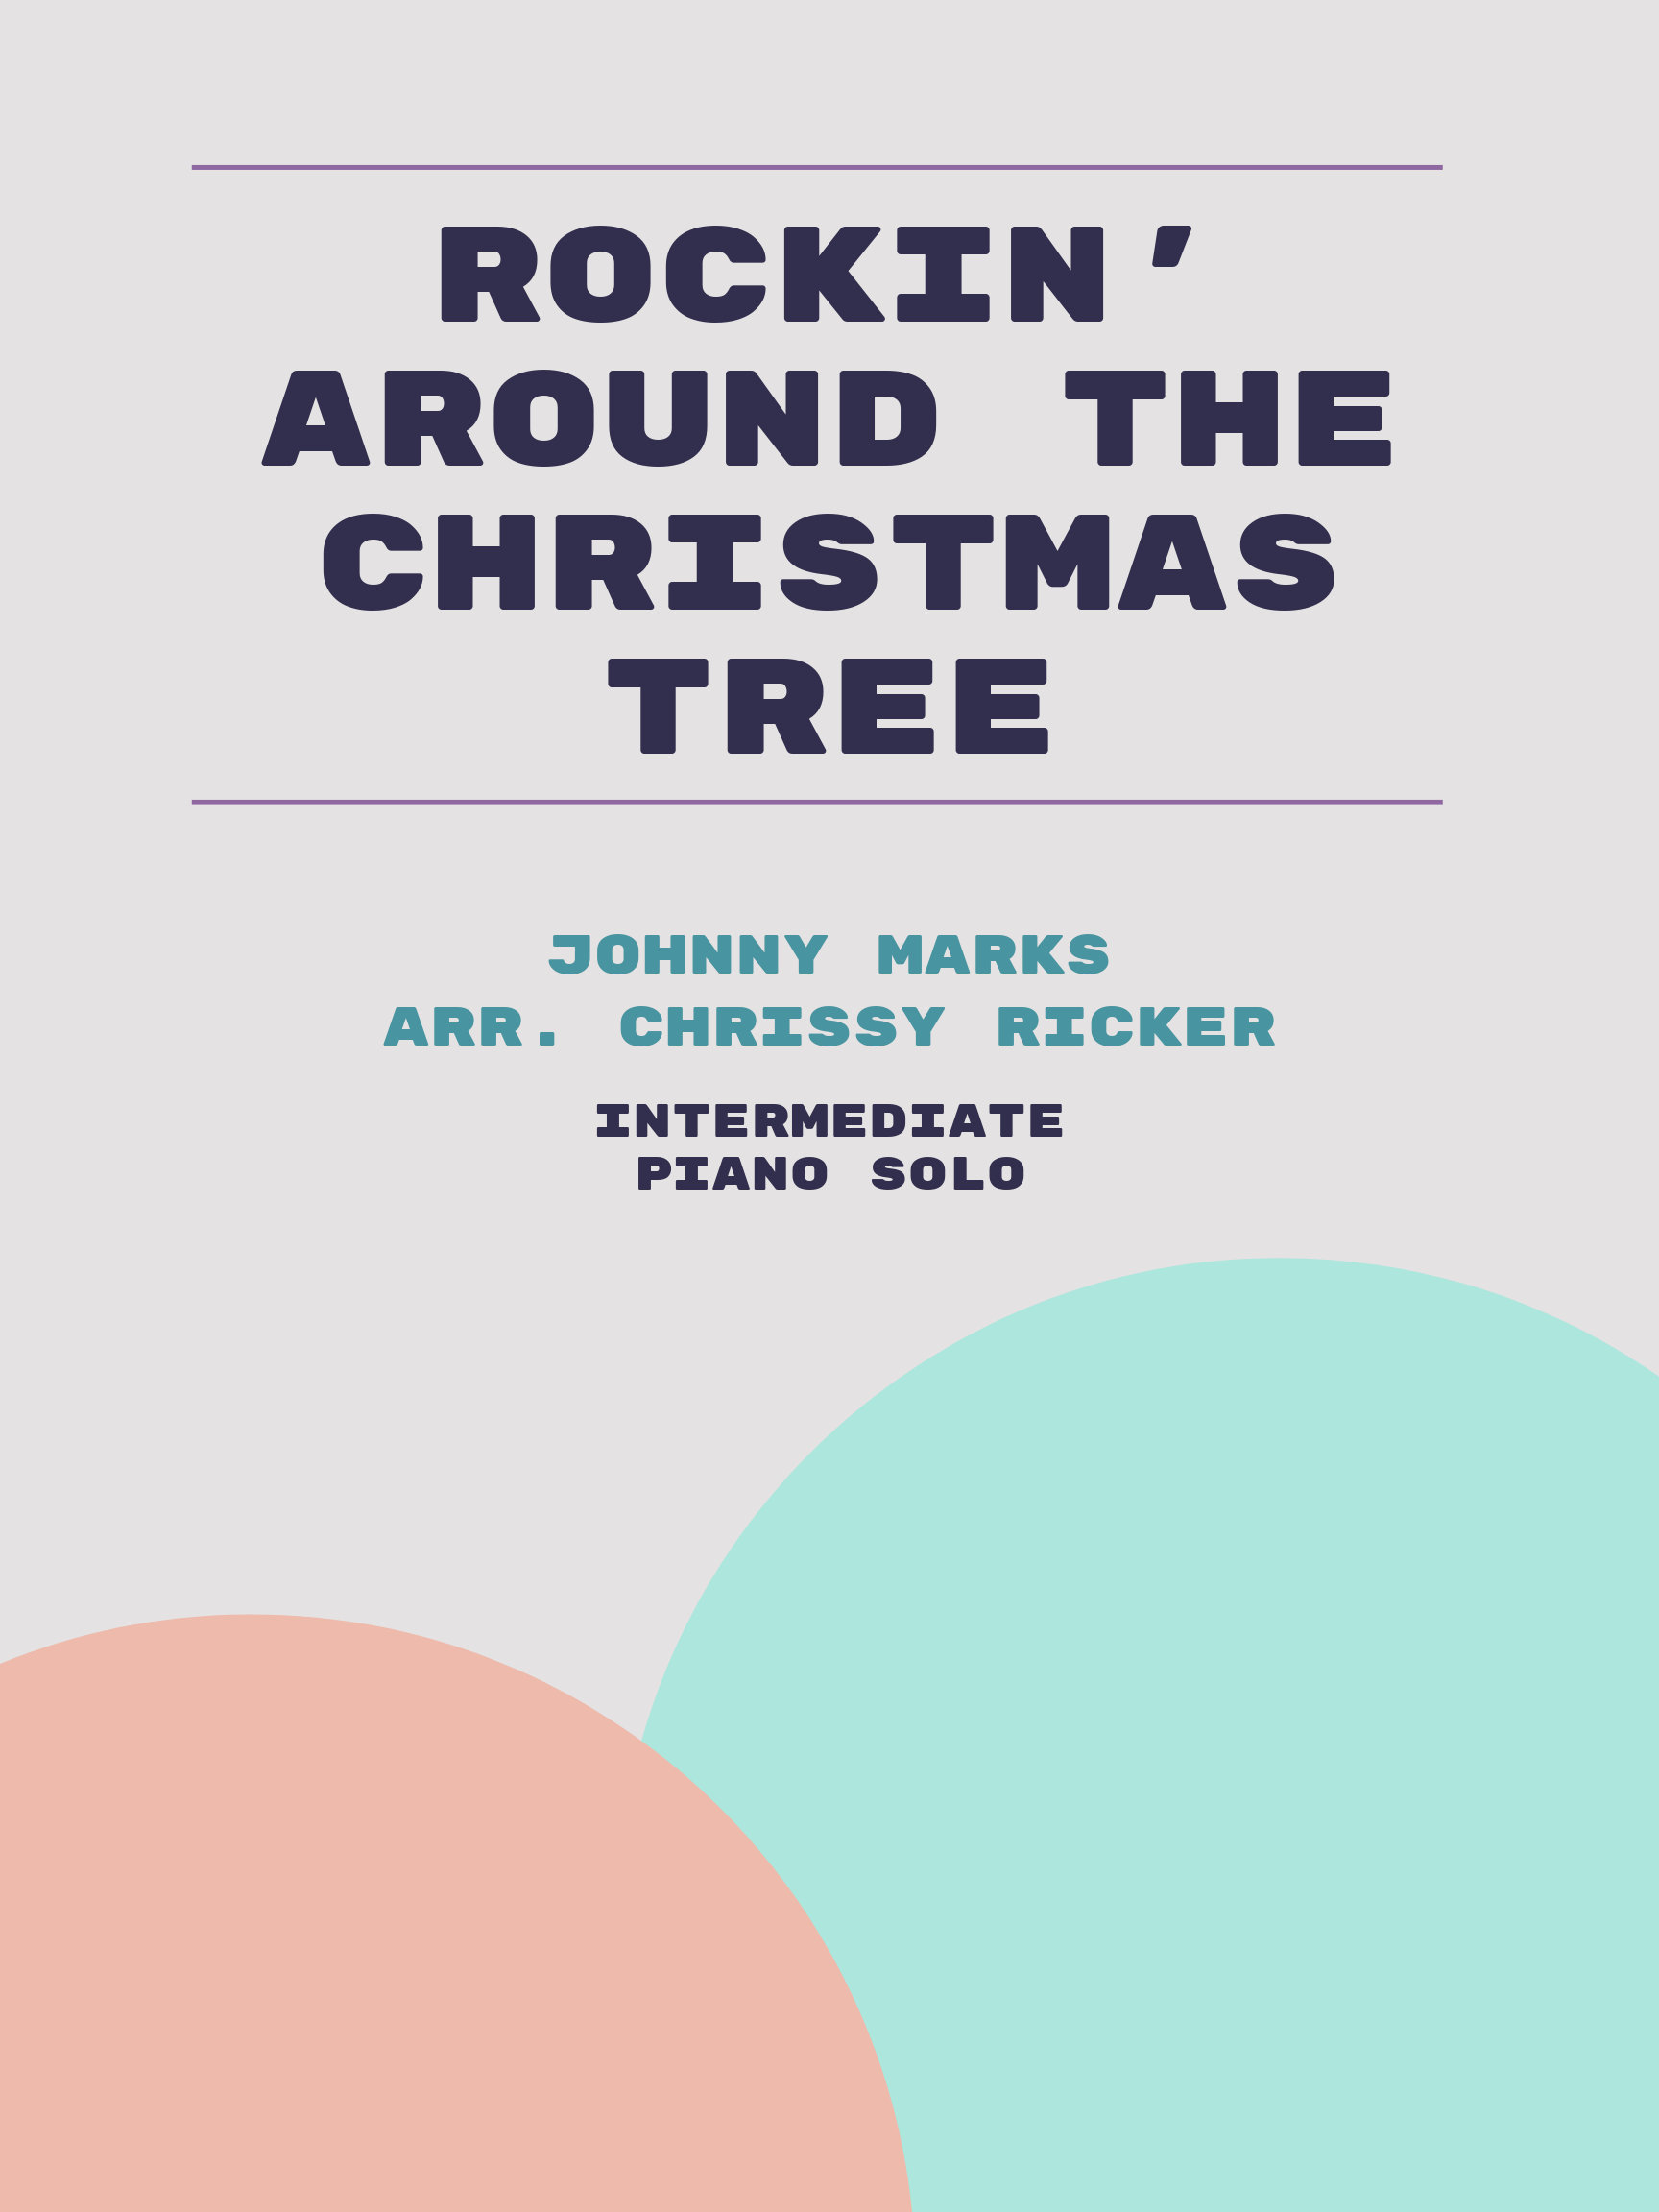 Rockin' Around the Christmas Tree by Johnny Marks